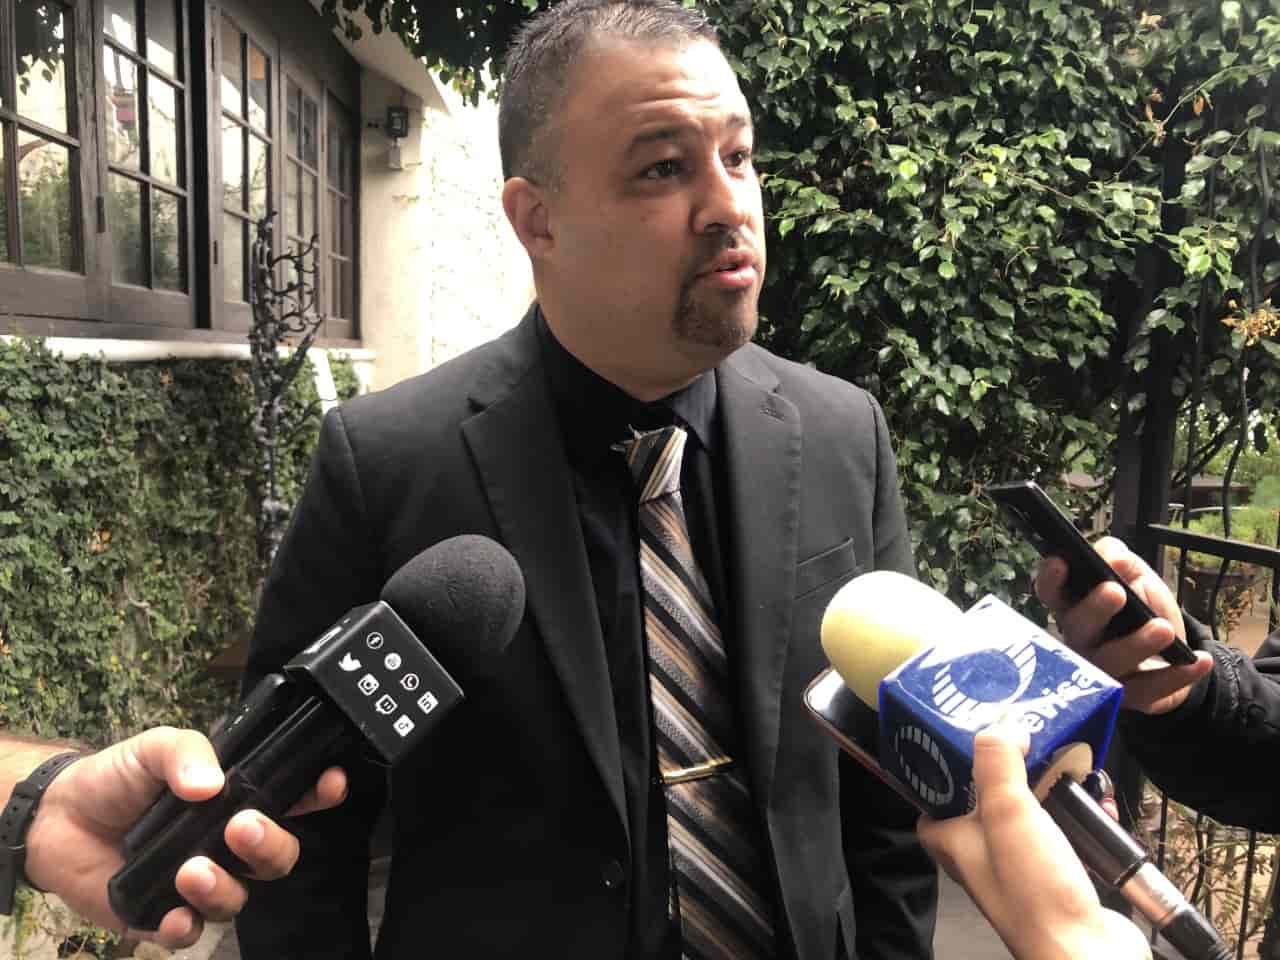 Exhorta el Colegio de Abogados de Tijuana a la Gobernadora a enviar terna para nombrar al Fiscal